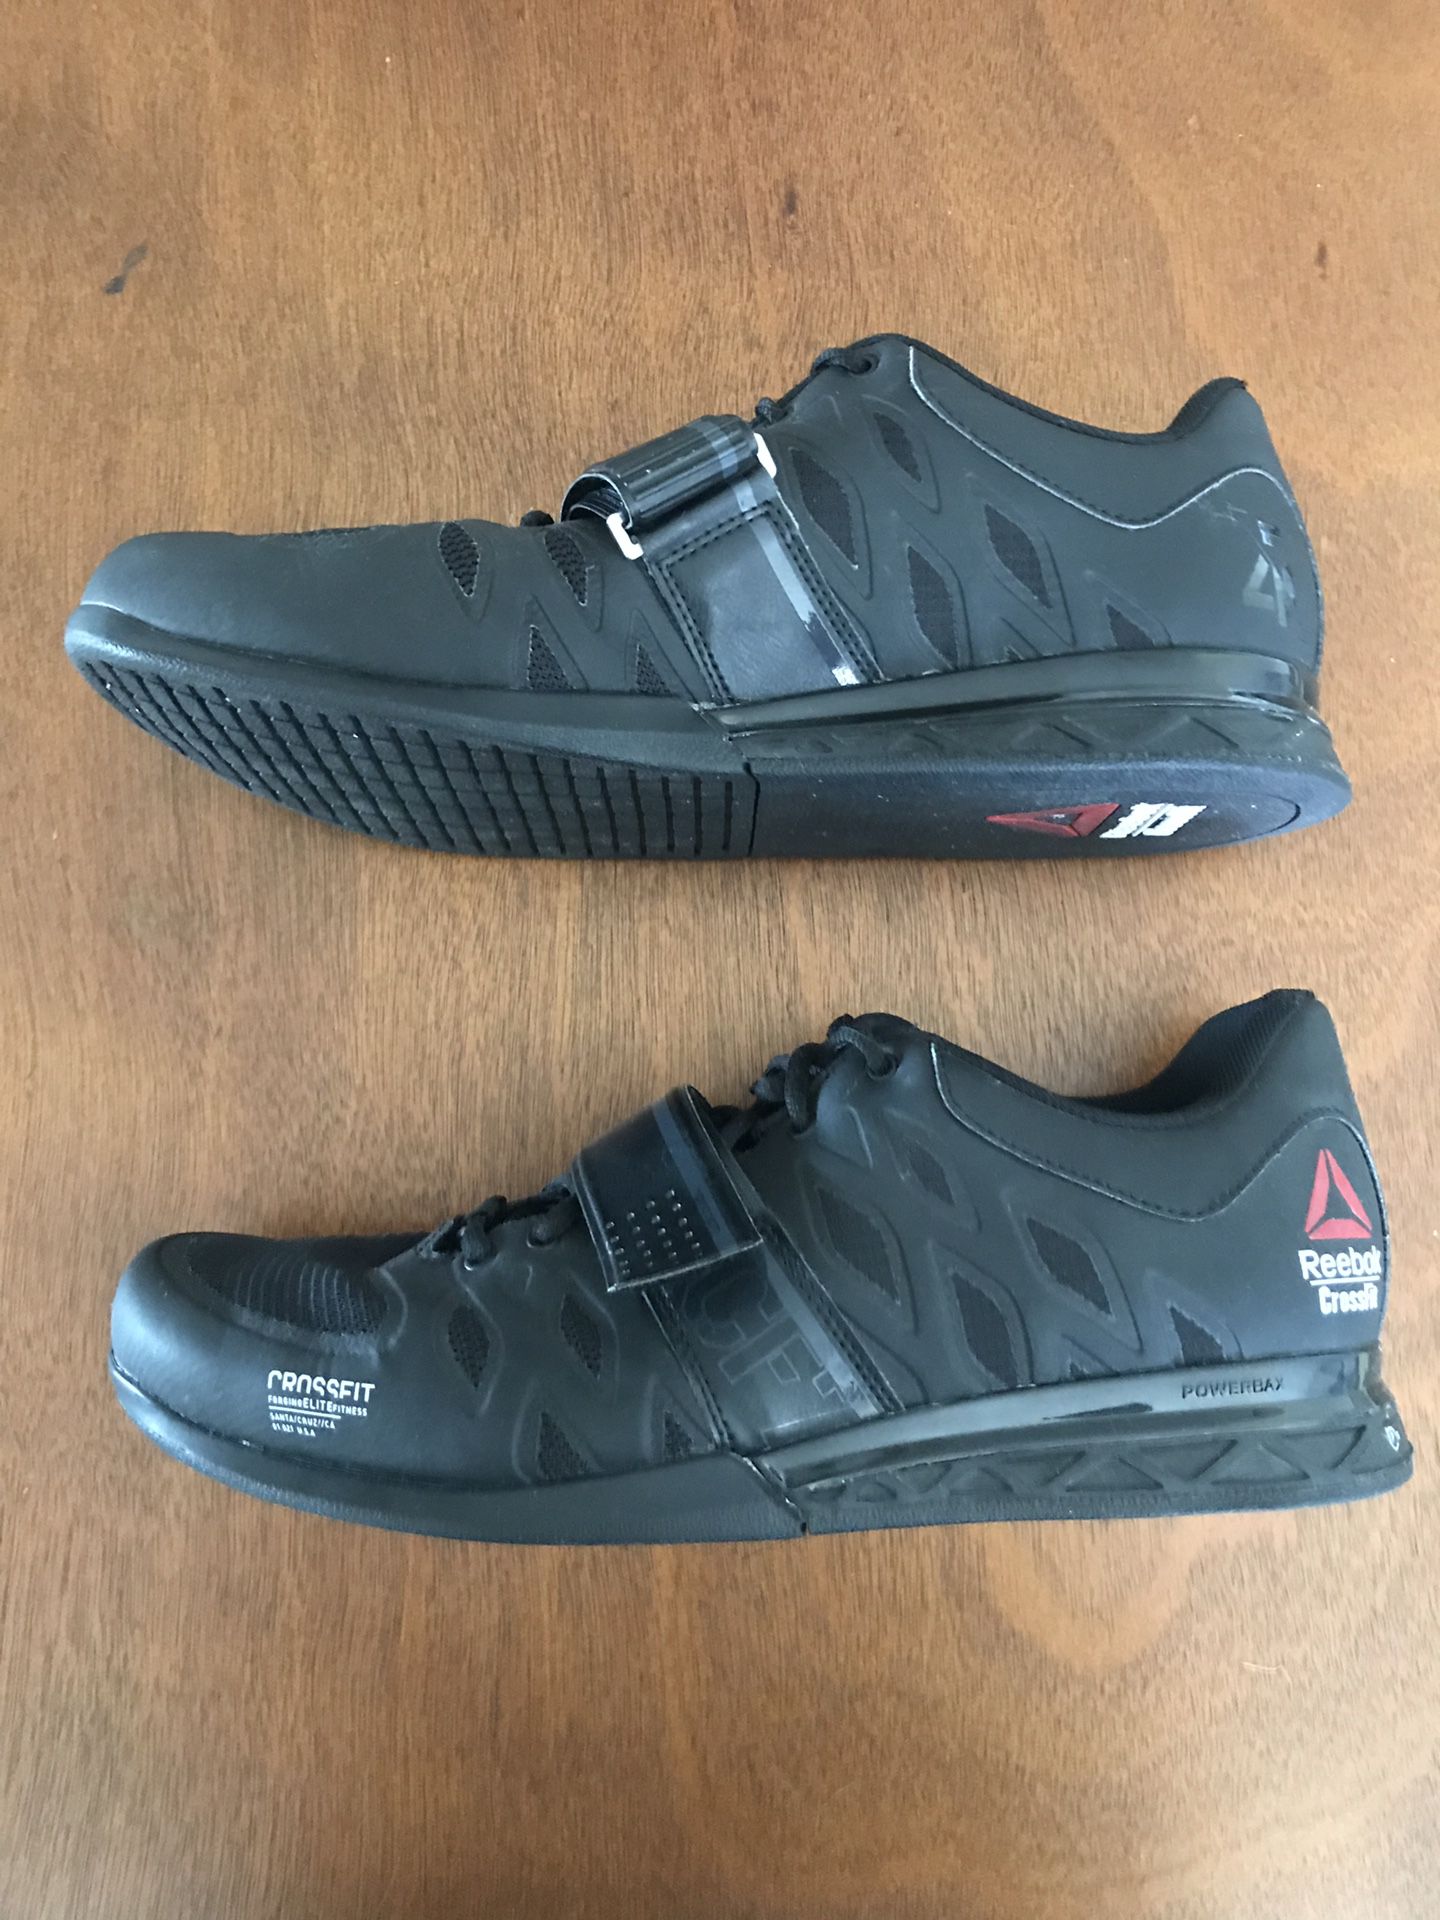 Reebok Men’s CrossFit Lifter 2.0 Training shoes, Black/Coal, 11 M